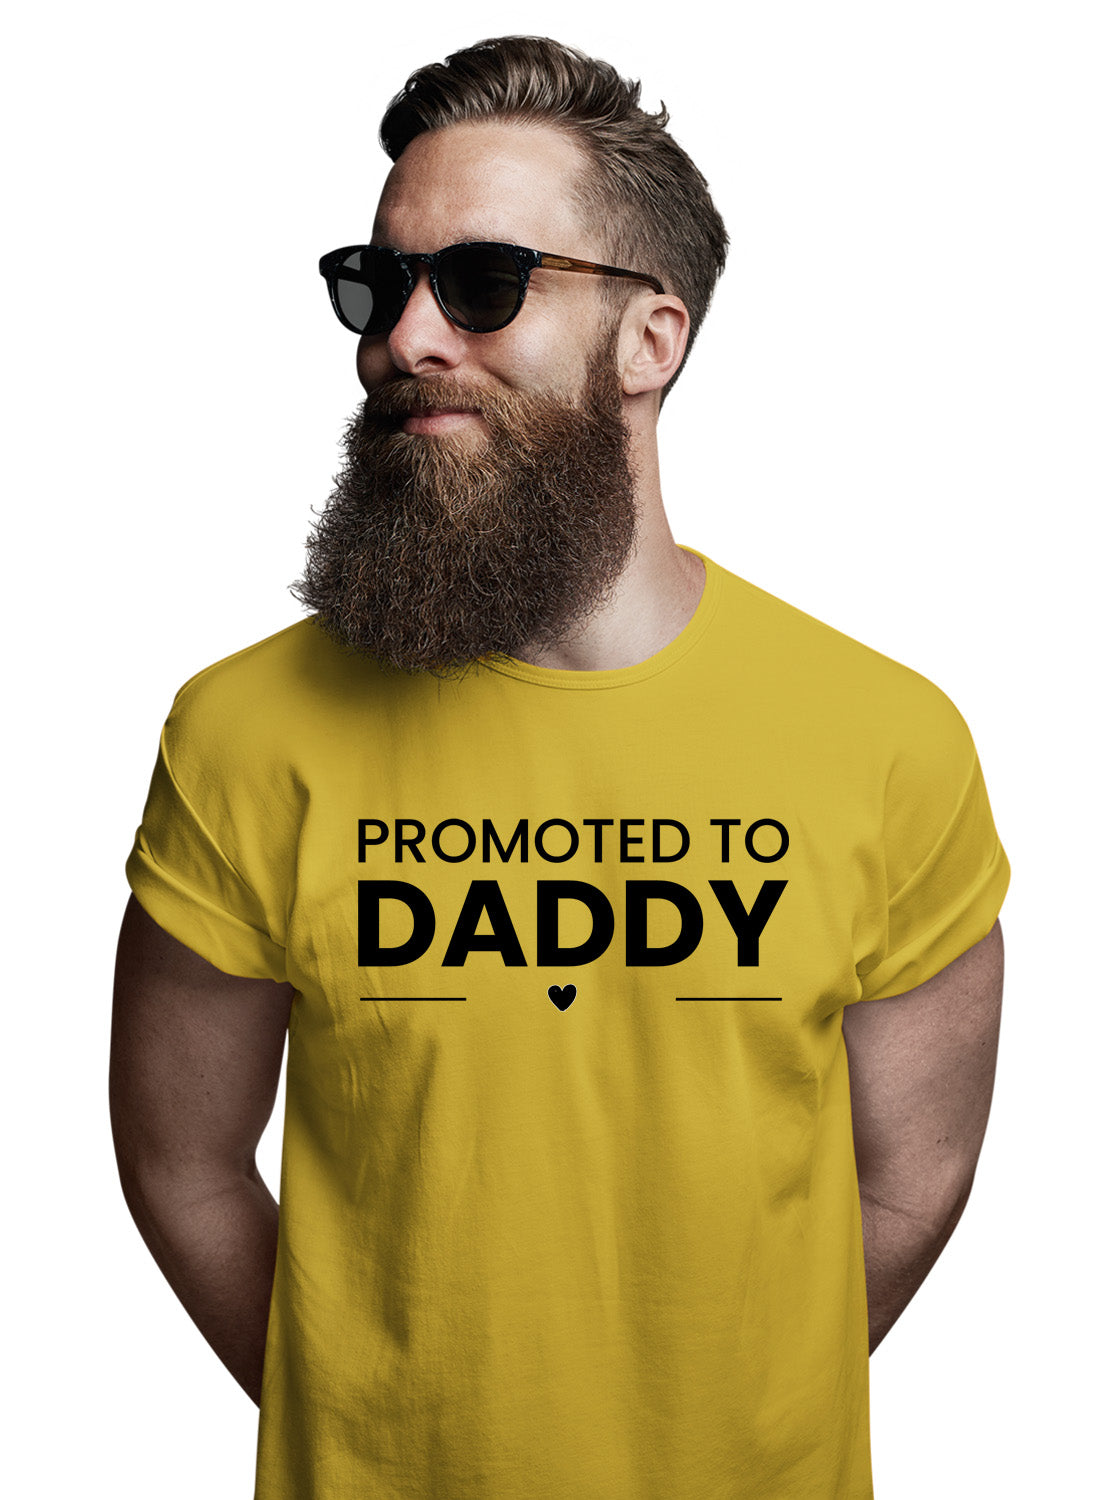 Beloved Dad - Men's Printed Tshirt for Father